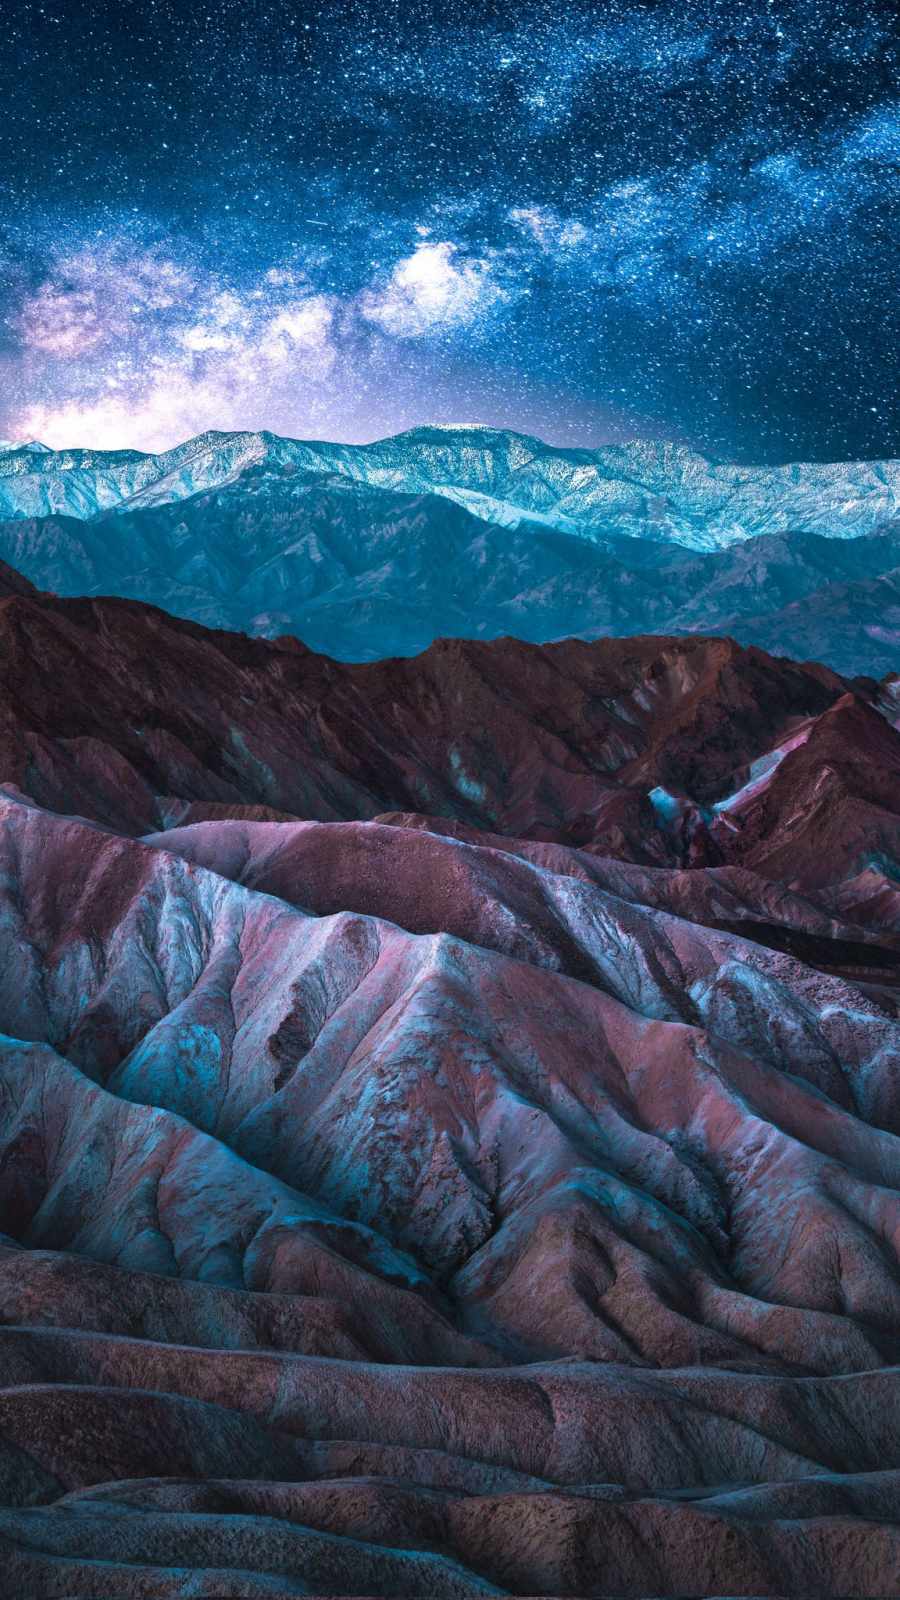 Night Mountains IPhone Wallpaper Wallpaper, iPhone Wallpaper